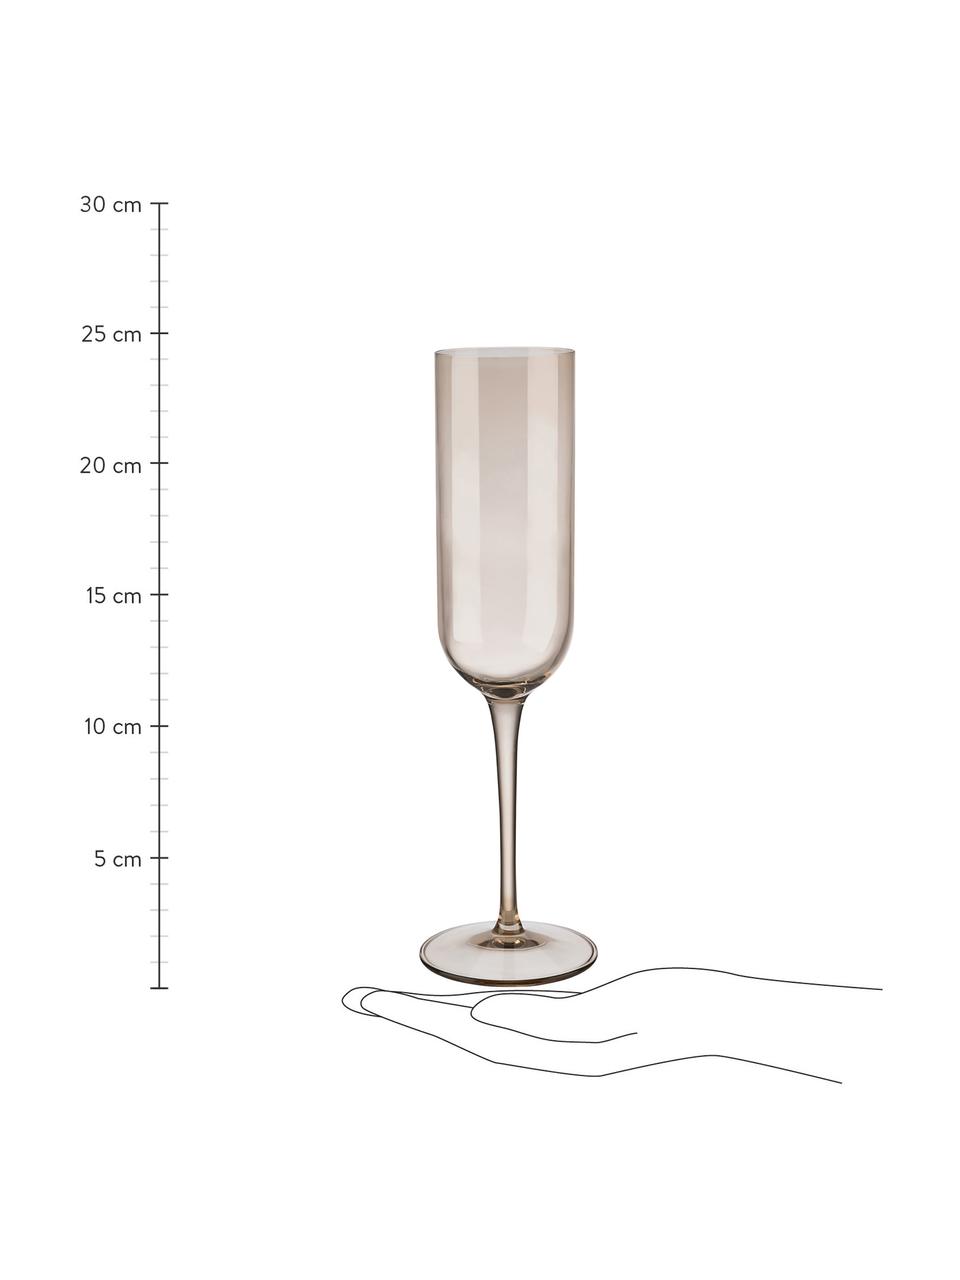 Flute champagne marrone Fuum 4 pz, Vetro, Beige trasparente, Ø 7 x Alt. 24 cm, 210 ml